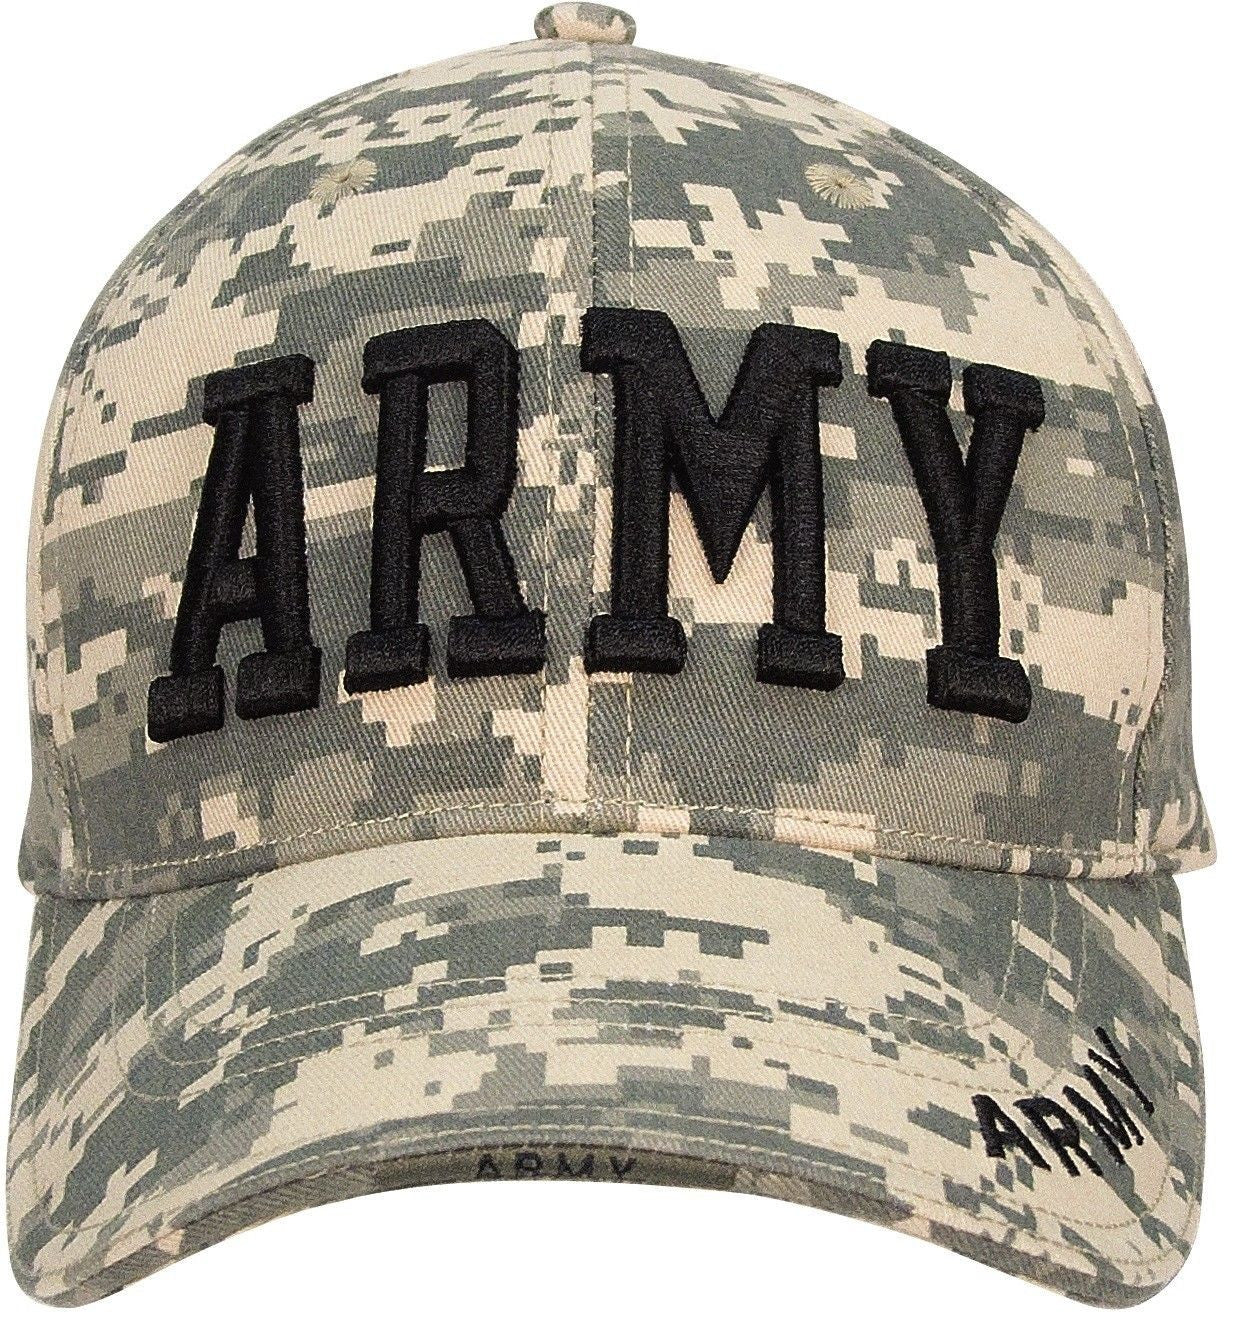 ACU Digital "Army" - Deluxe Baseball Cap